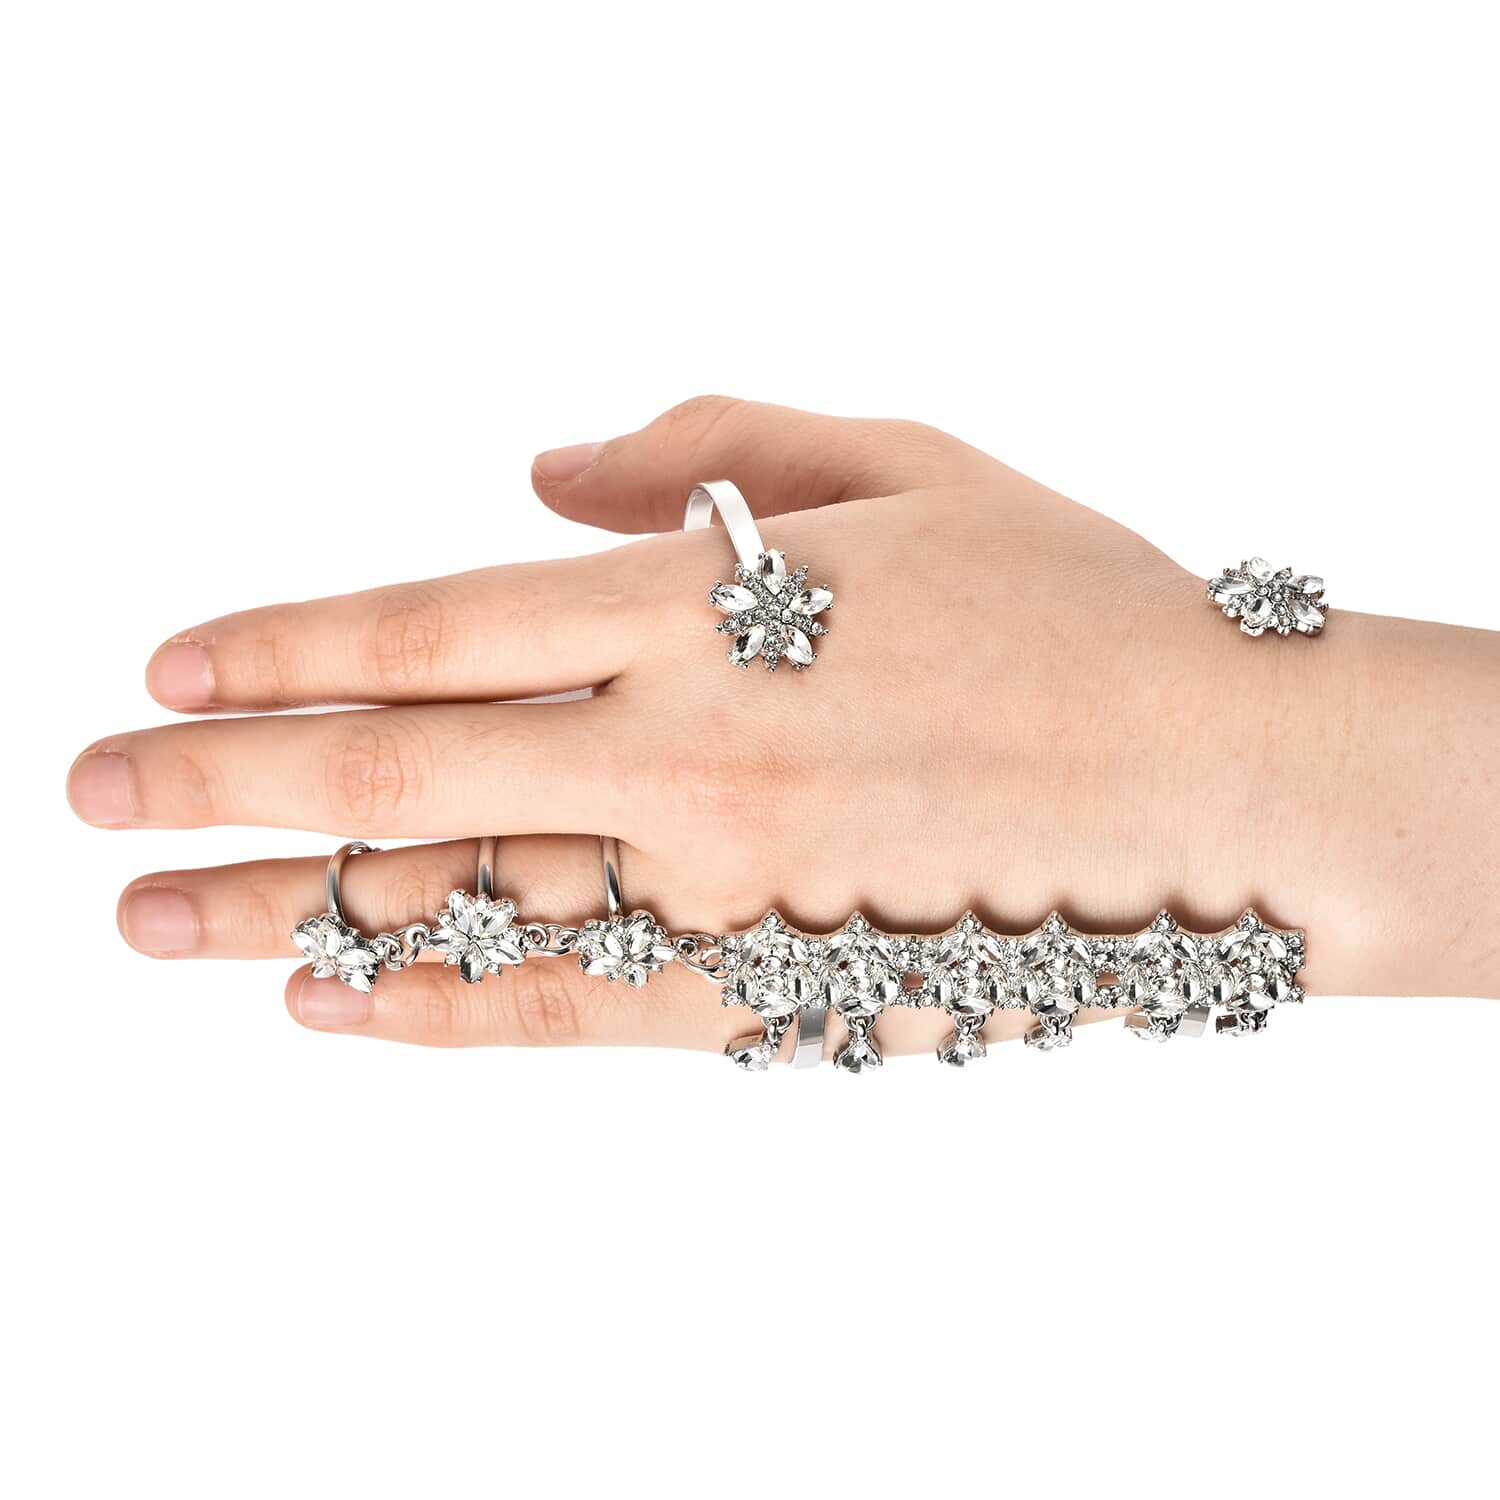 Buy Exclusive Fashion Jewellery Palm Bracelet Ring online  Looksgudin